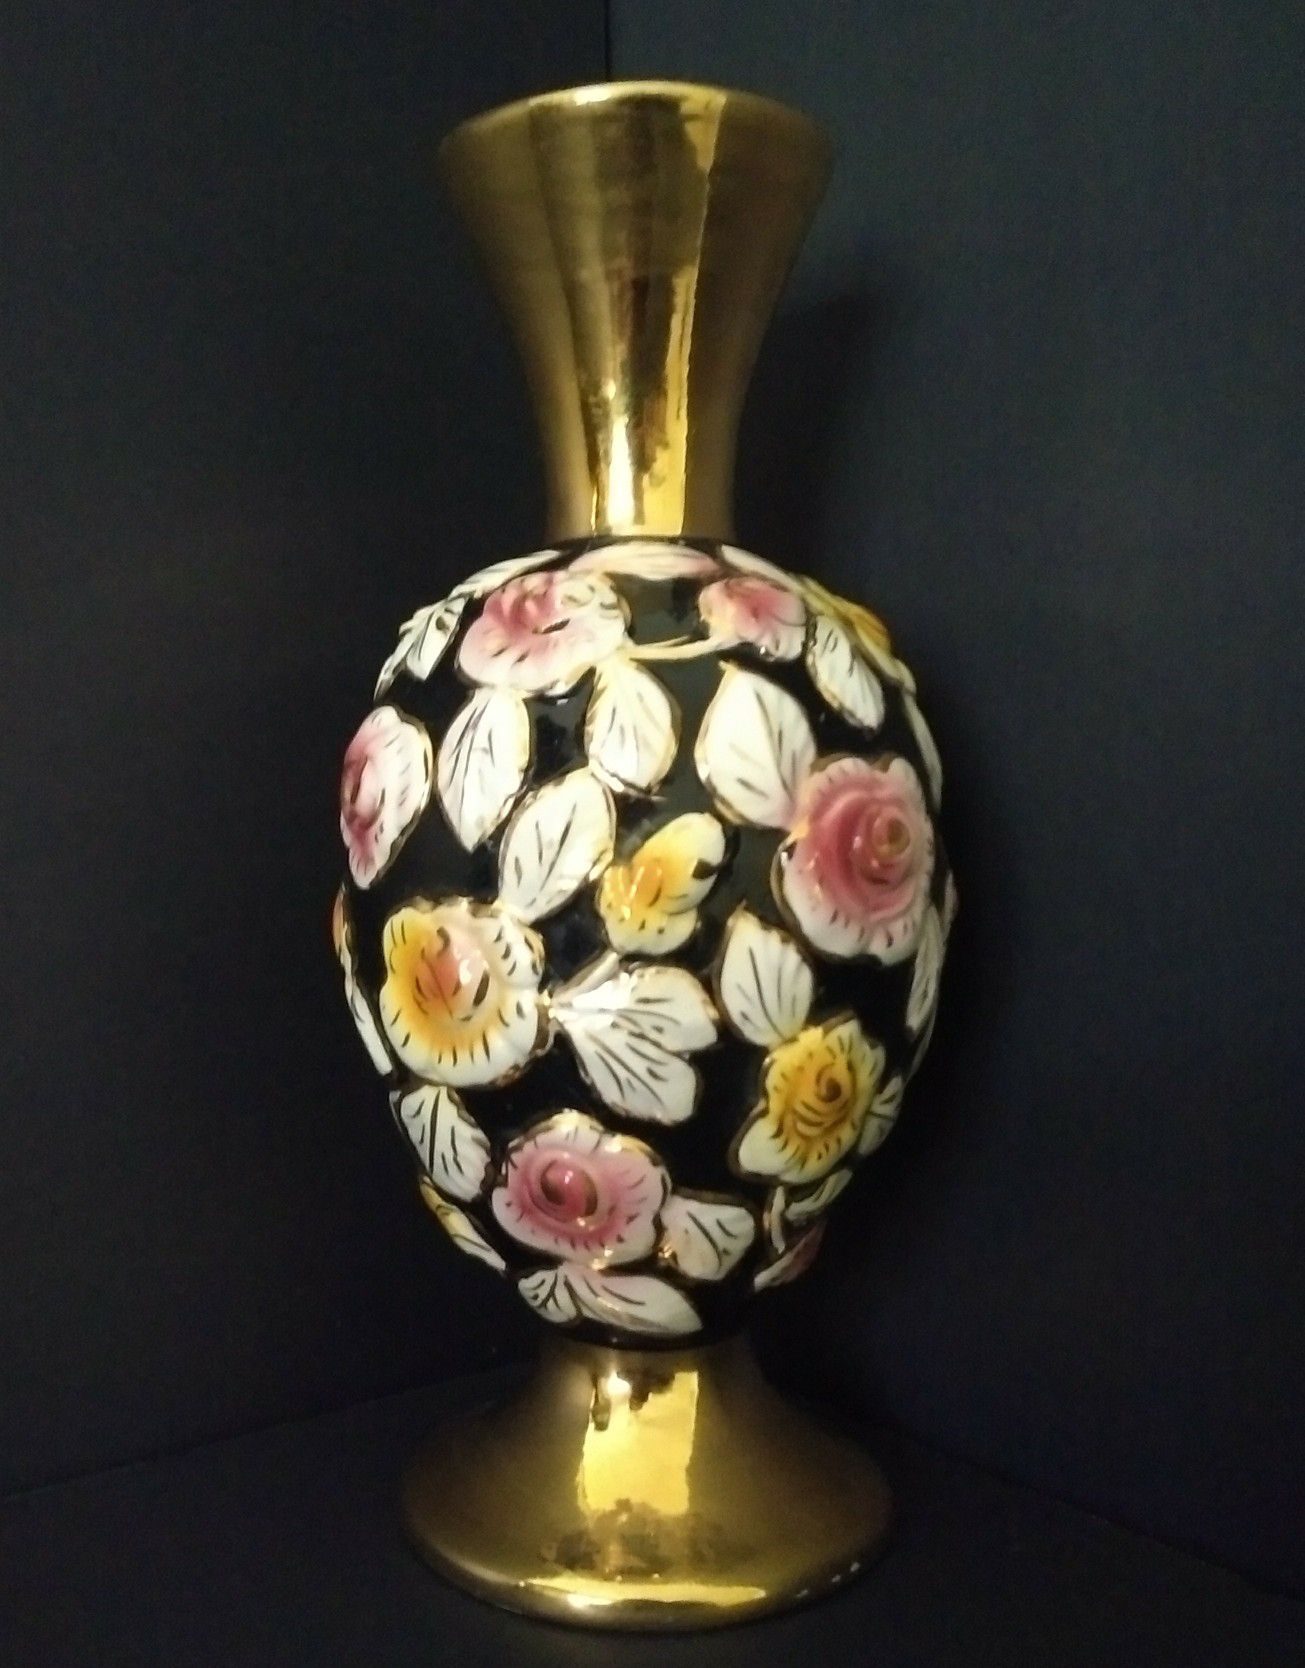 Portugal Porcelain Vase - Black Gold Elpa 2270-5 for in St. Peters, MO - OfferUp